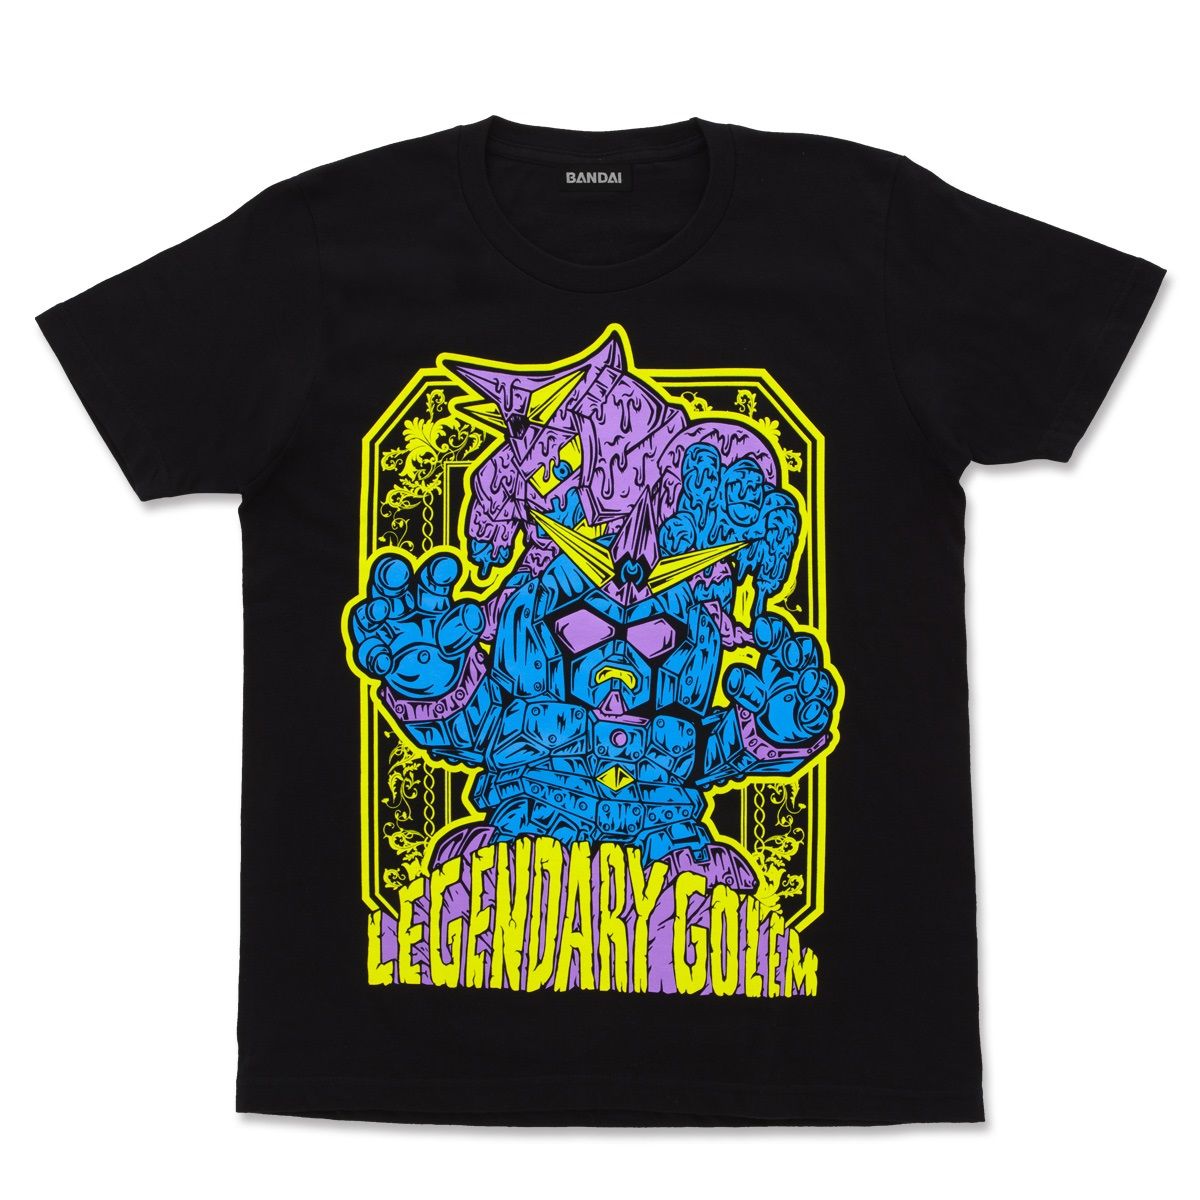 The Legendary Giant feat. STUDIO696 T-shirt